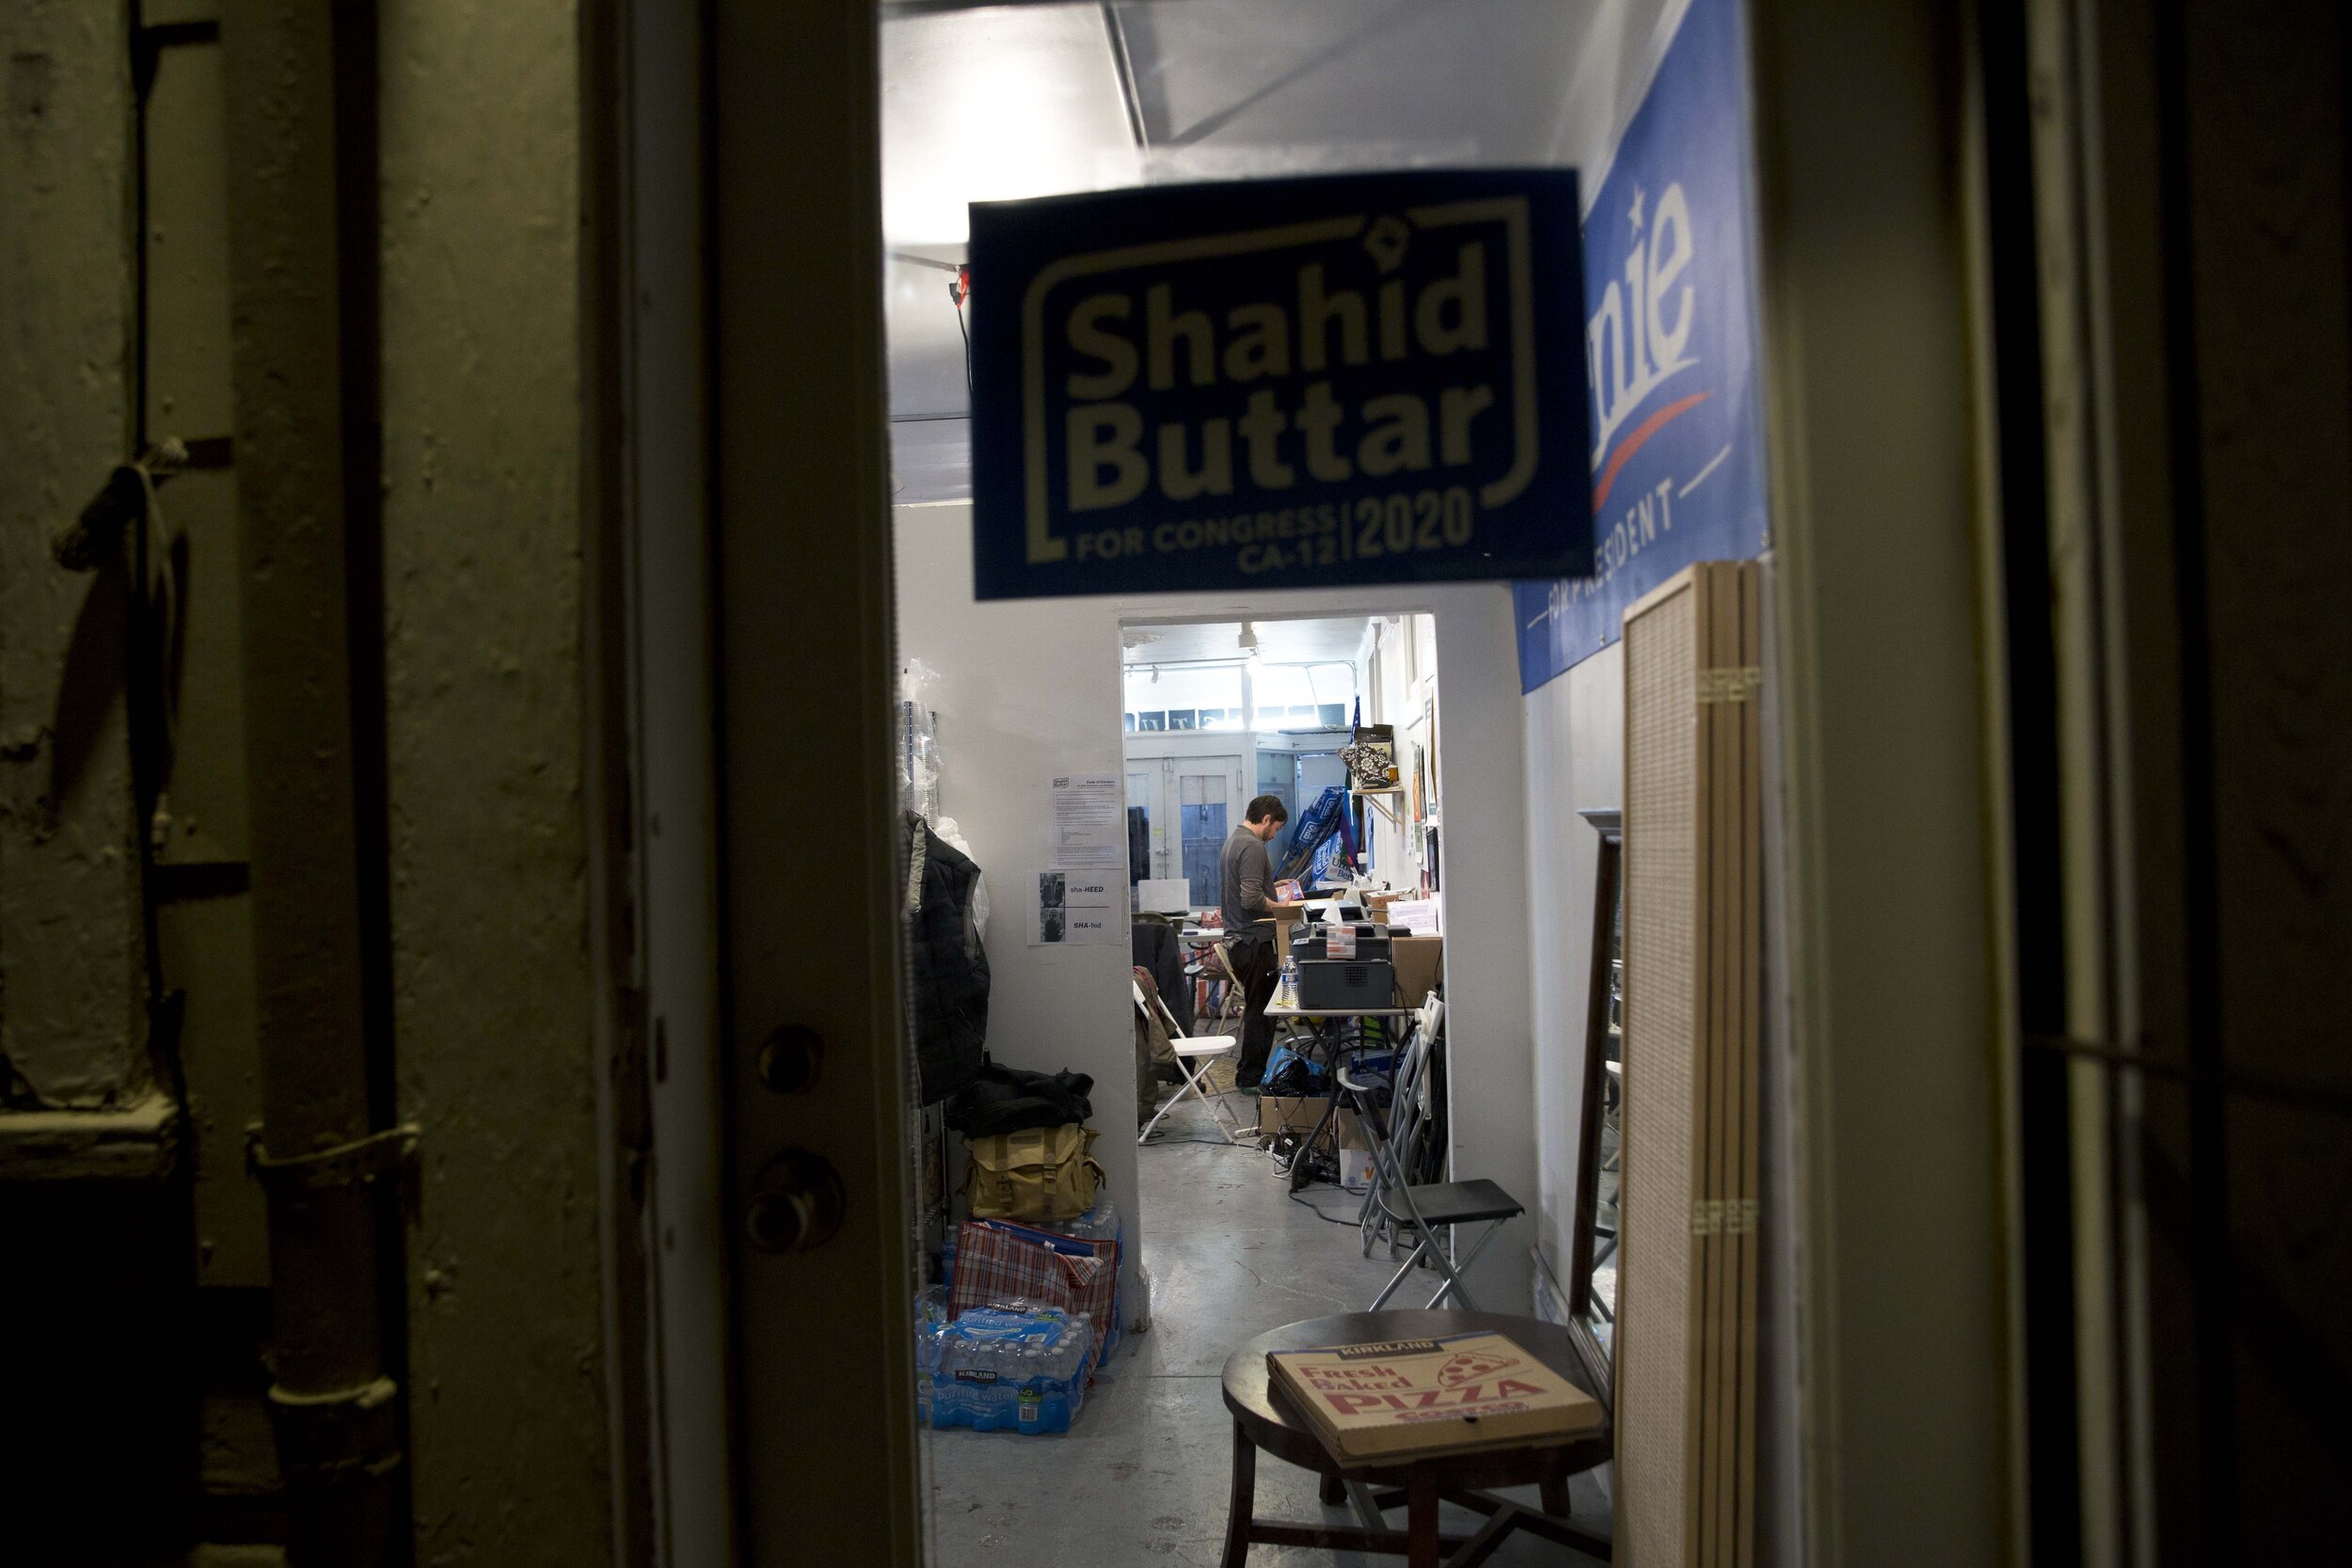 Shahid Buttar campaign headquarters